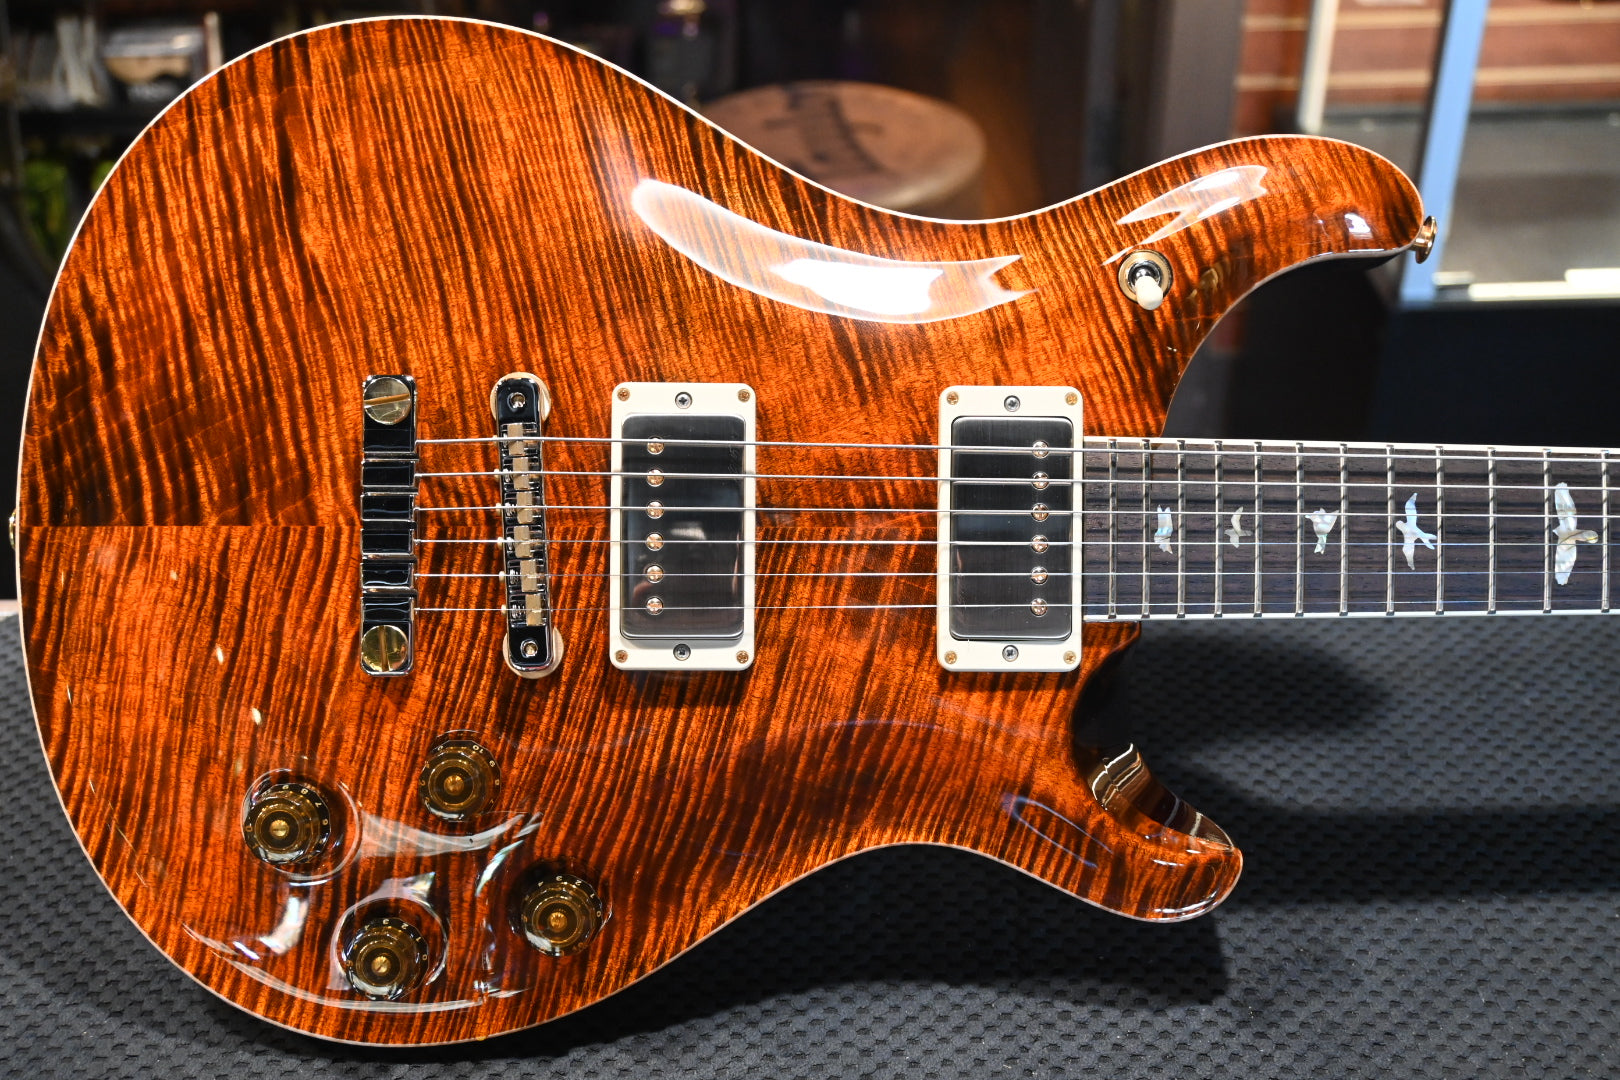 PRS McCarty 594 10-Top - Orange Tiger Guitar #2259 - Danville Music